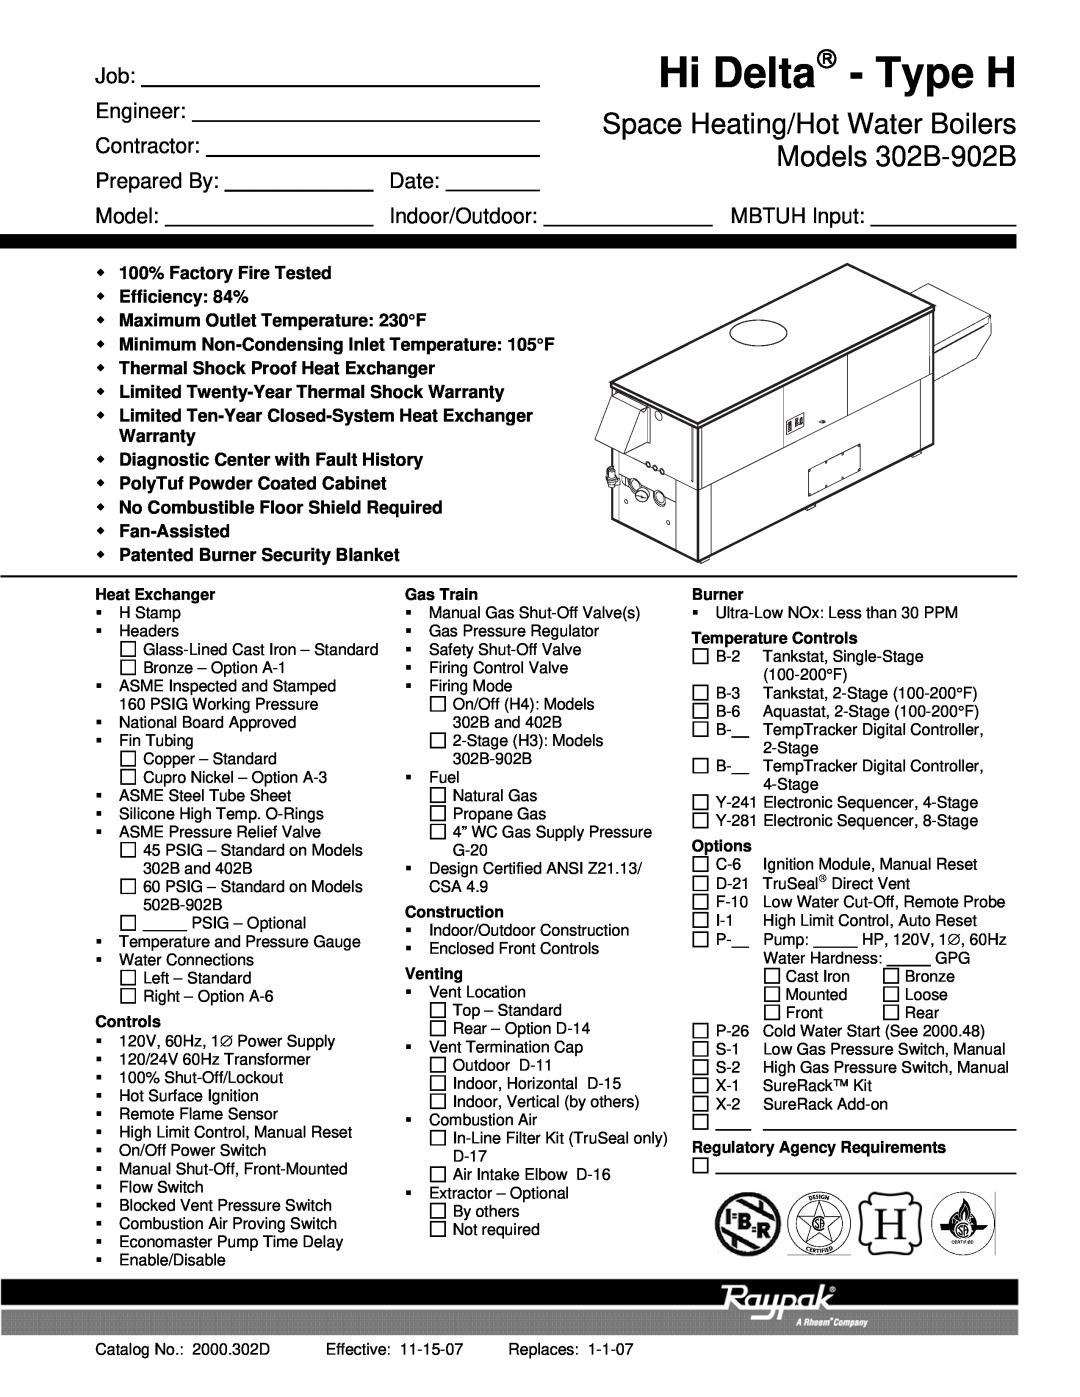 Raypak warranty Hi Delta→ - Type H, Space Heating/Hot Water Boilers, Models 302B-902B, Engineer, Contractor, Date 